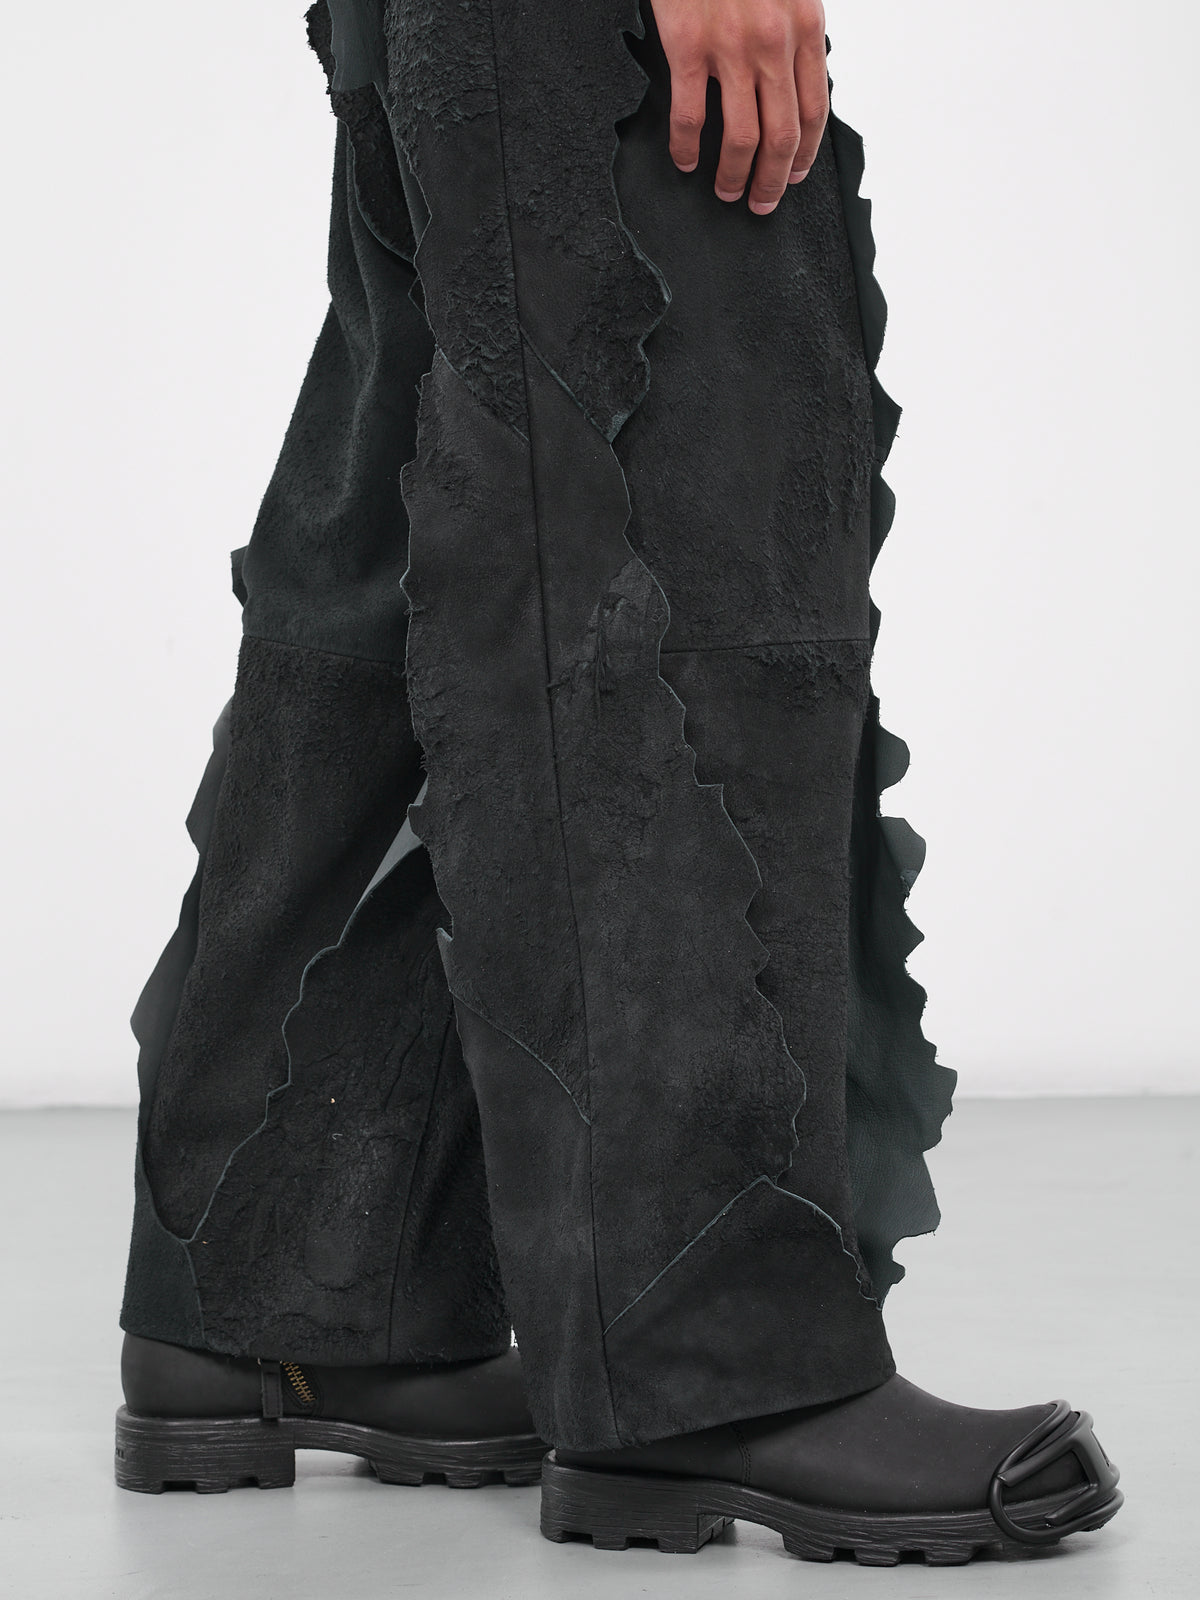 Distressed Leather Pants (A12582-0CNAK-9XX-DEEP-BLACK)